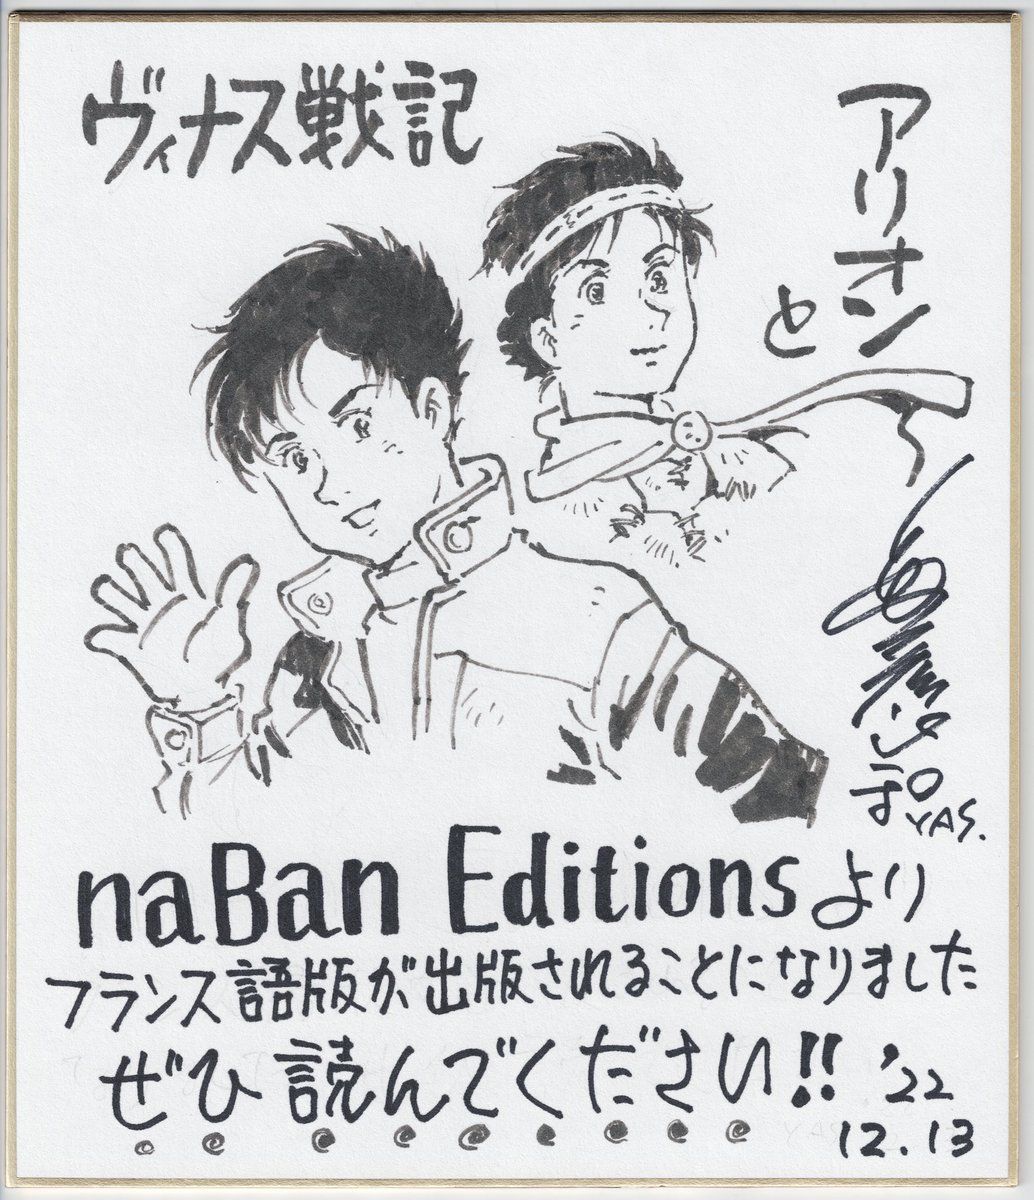 https://www.manga-news.com/public/2022/news_12/Yoshikazu_Yasuhiko_dedicace_naban.jpg